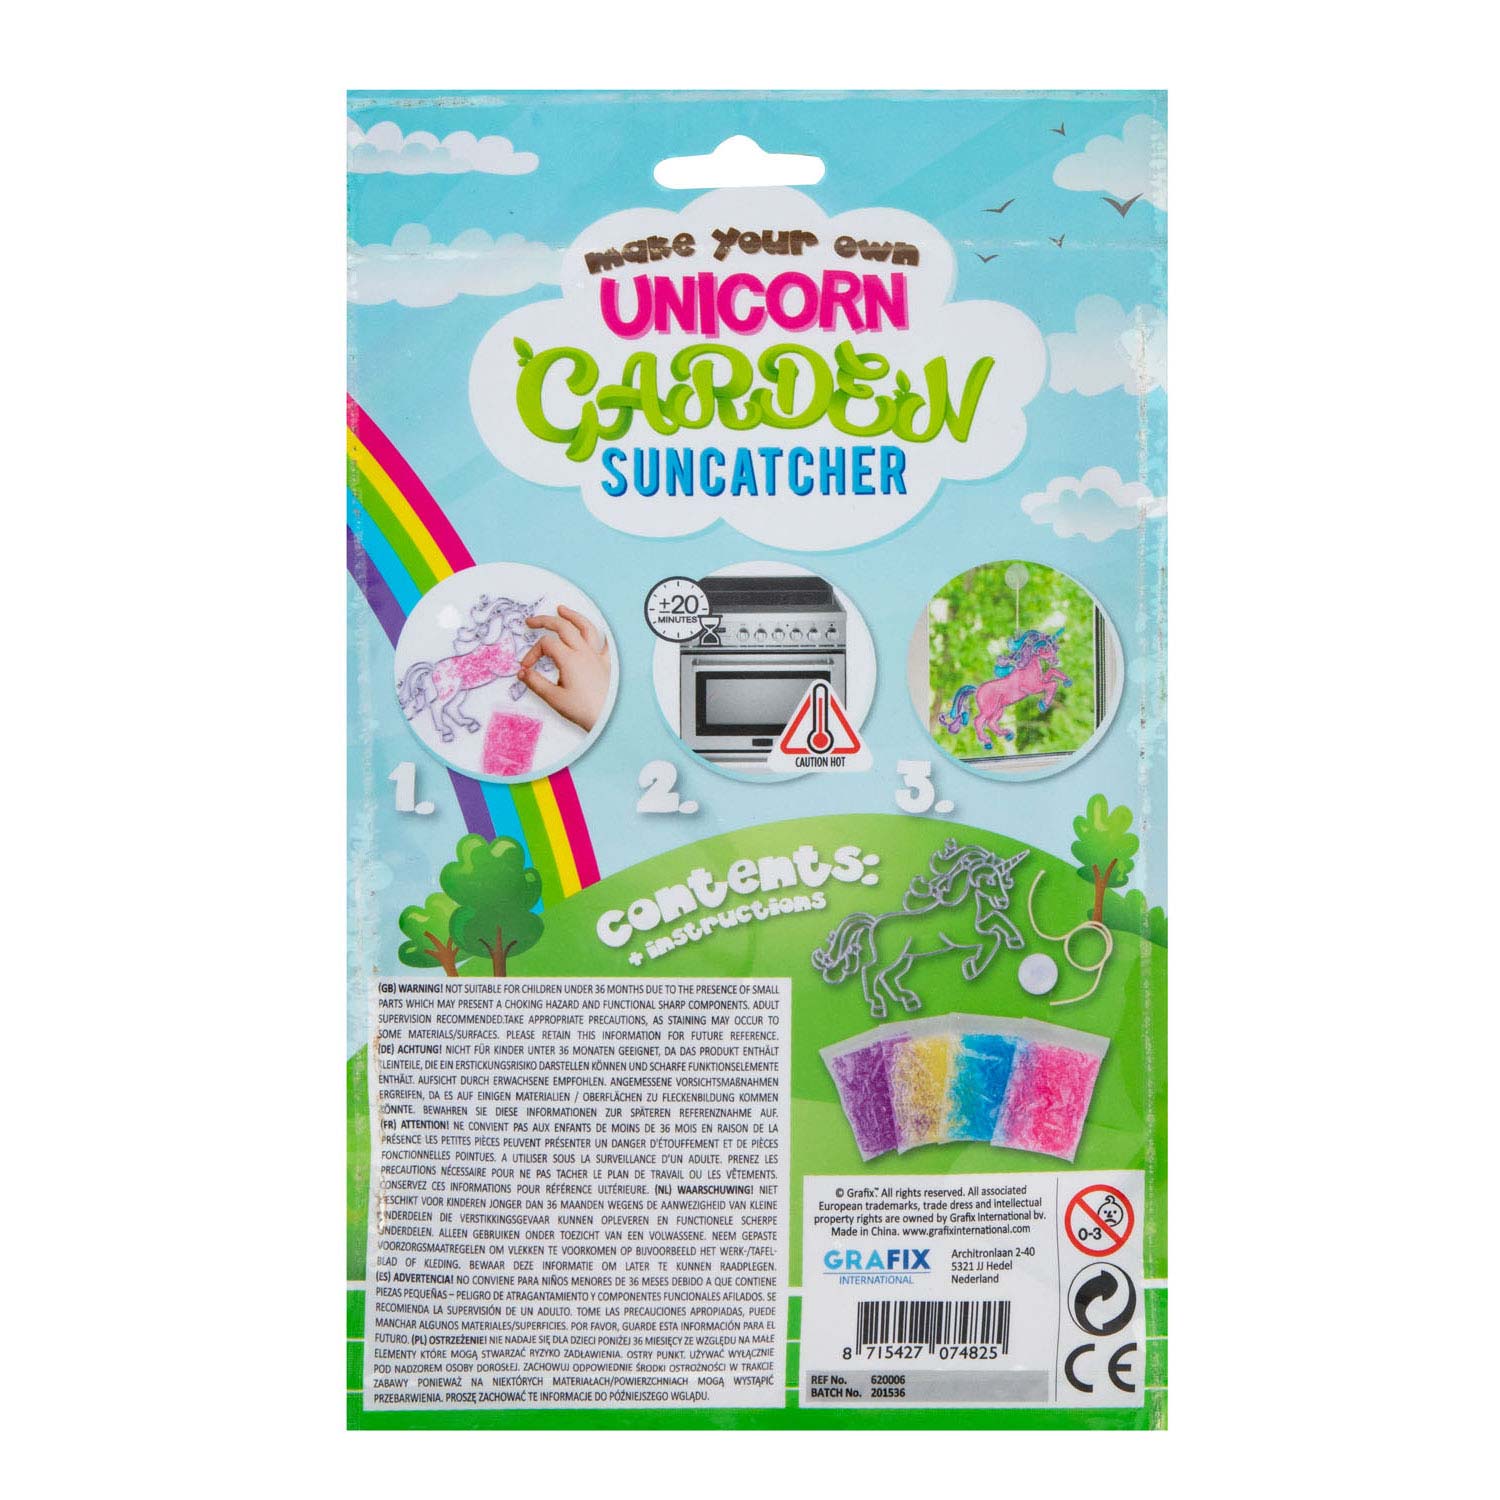 Create Your Own Unicorn Suncatcher Kit, 4pc